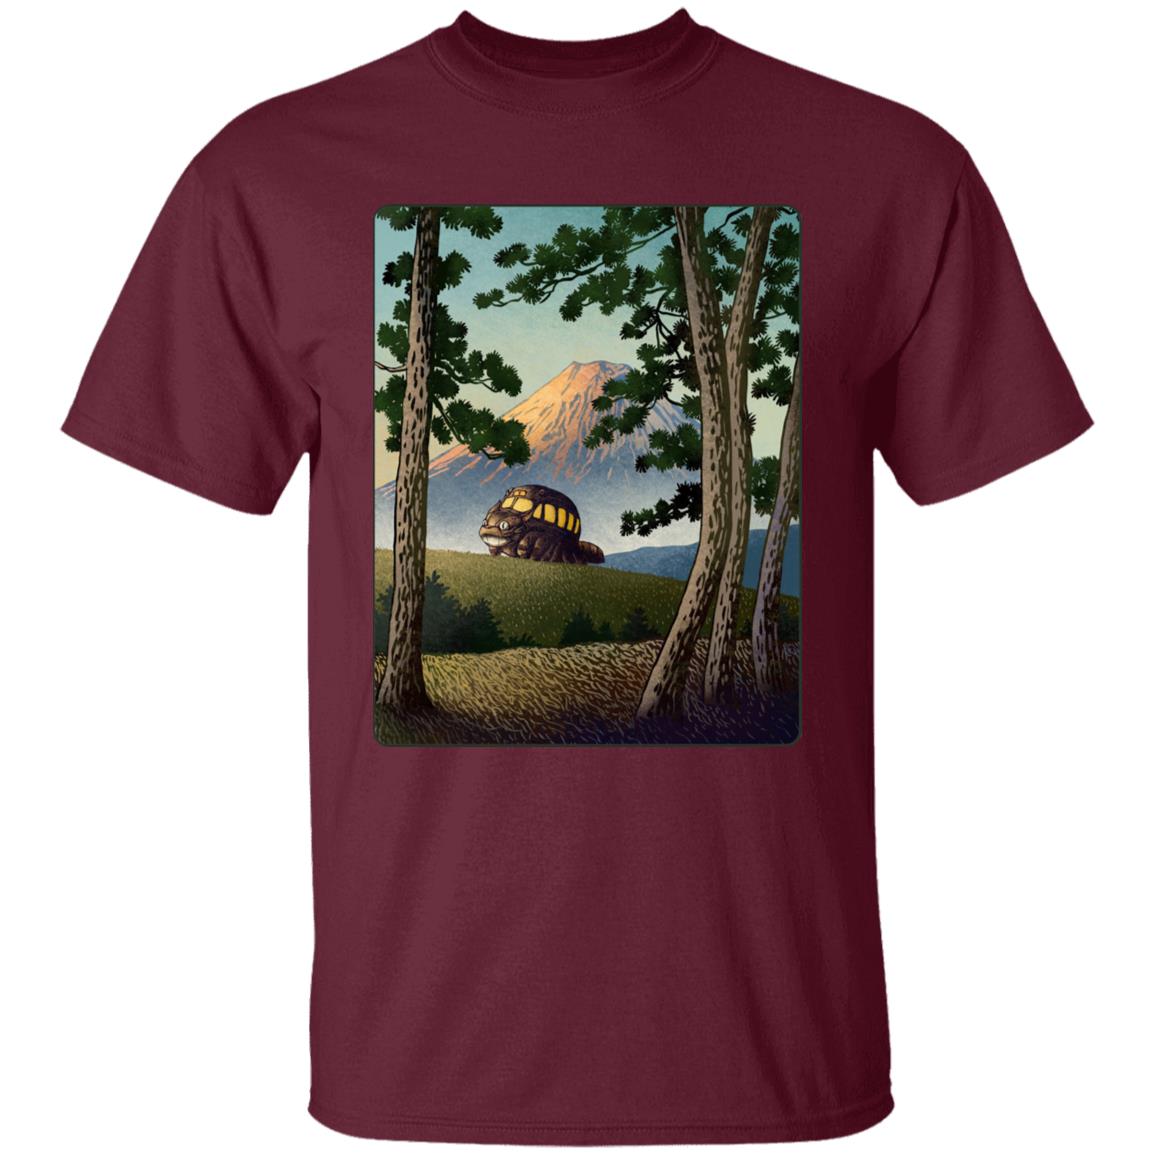 My Neighbor Totoro – Catbus Landscape T Shirt